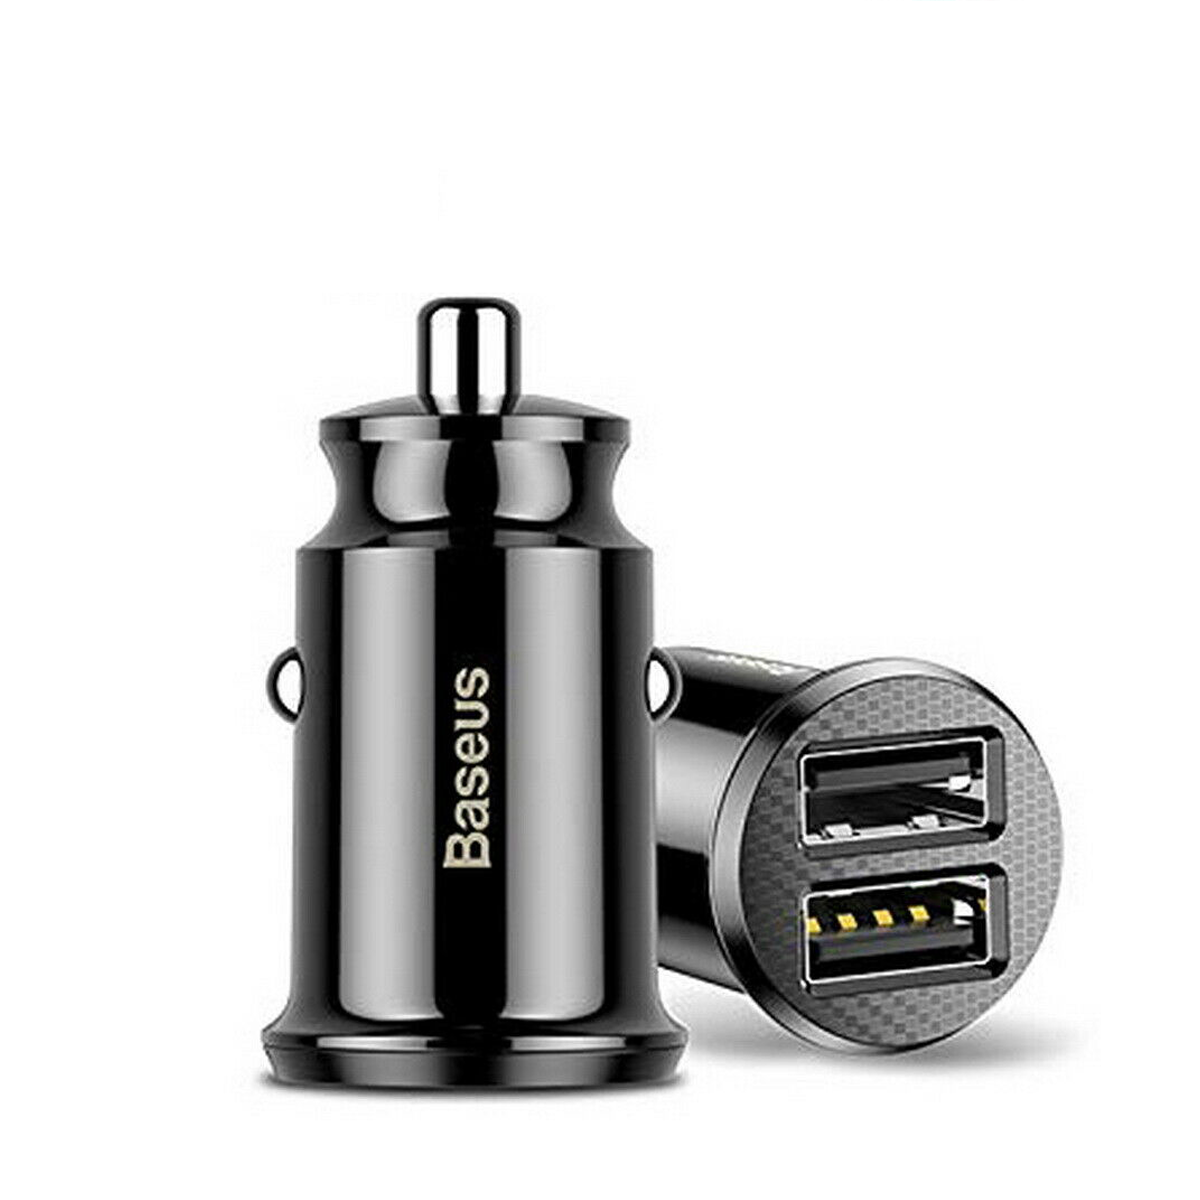 Ultra mini Baseus 3.1A Fast Charging Dual Ports USB Car Phone Charger Adapter